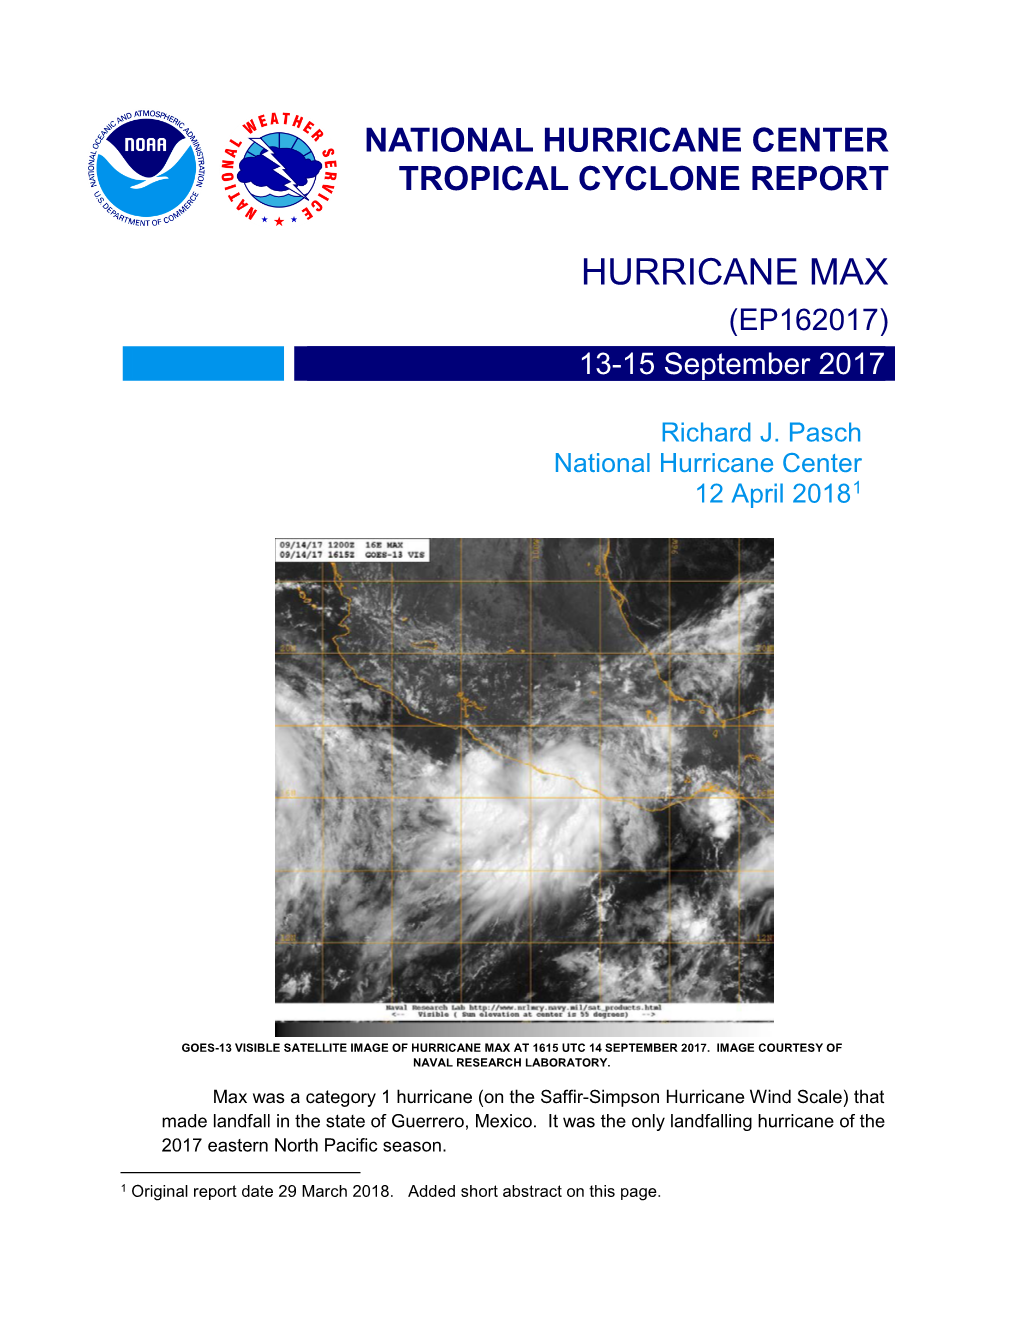 Hurricane Center Tropical Cyclone Report